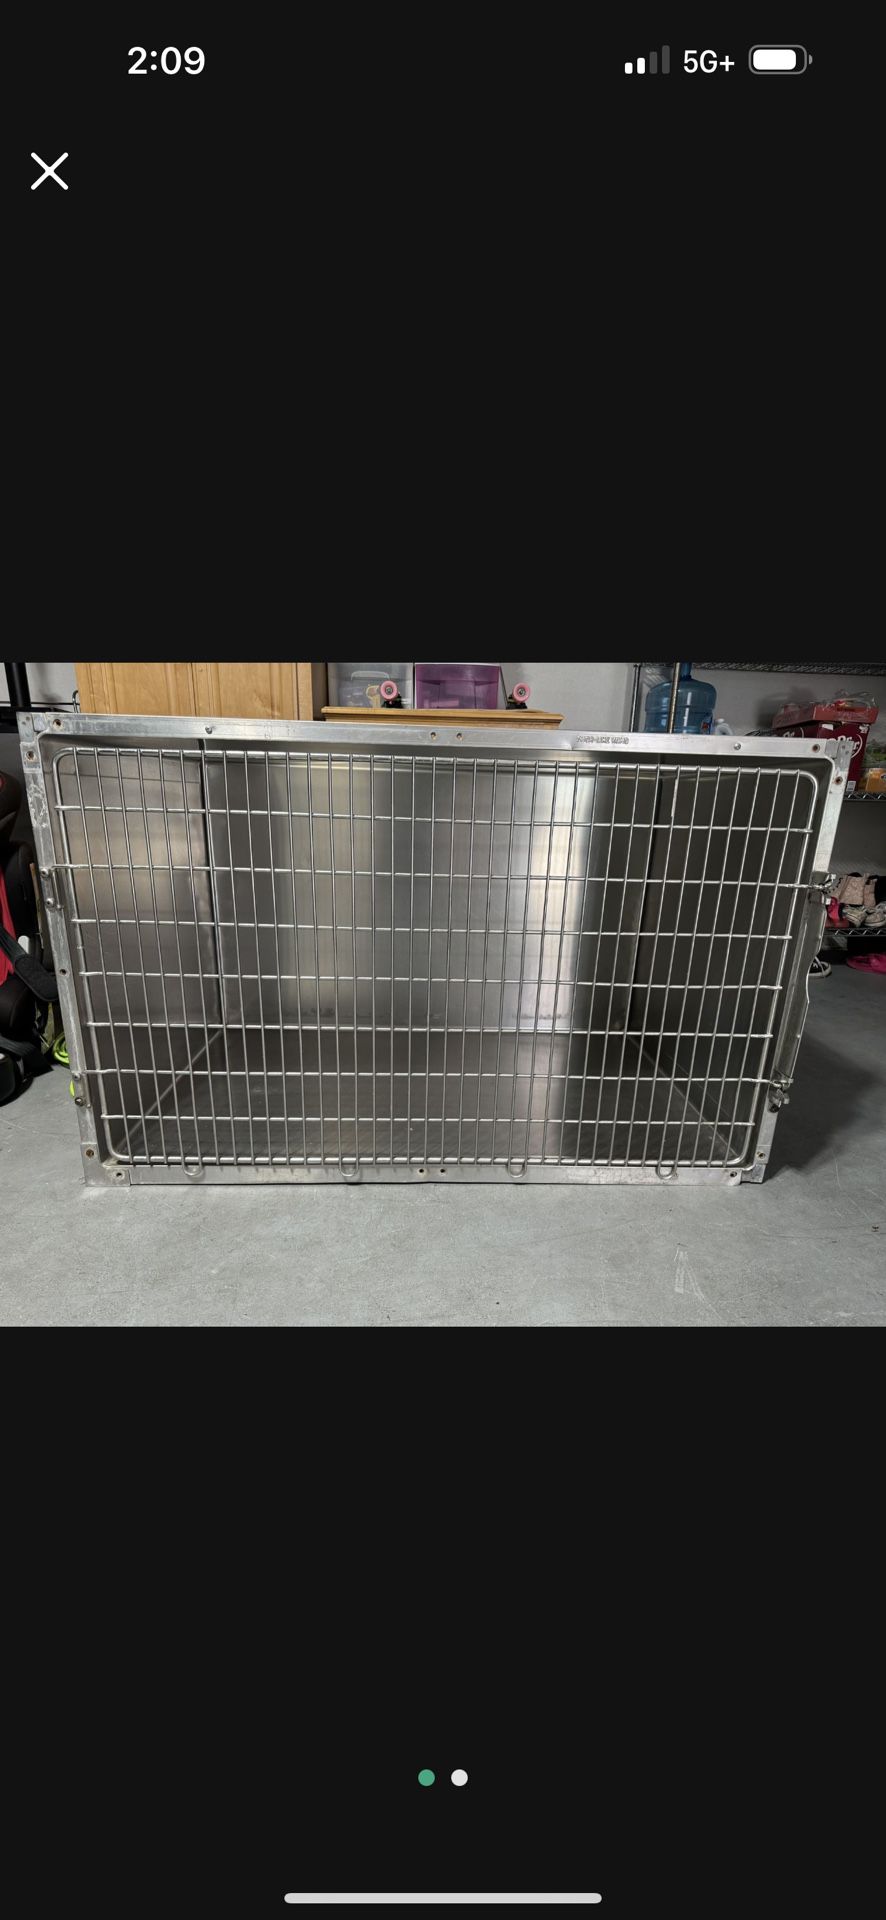 Stainless Steel Vet Grade Animal Crate. 